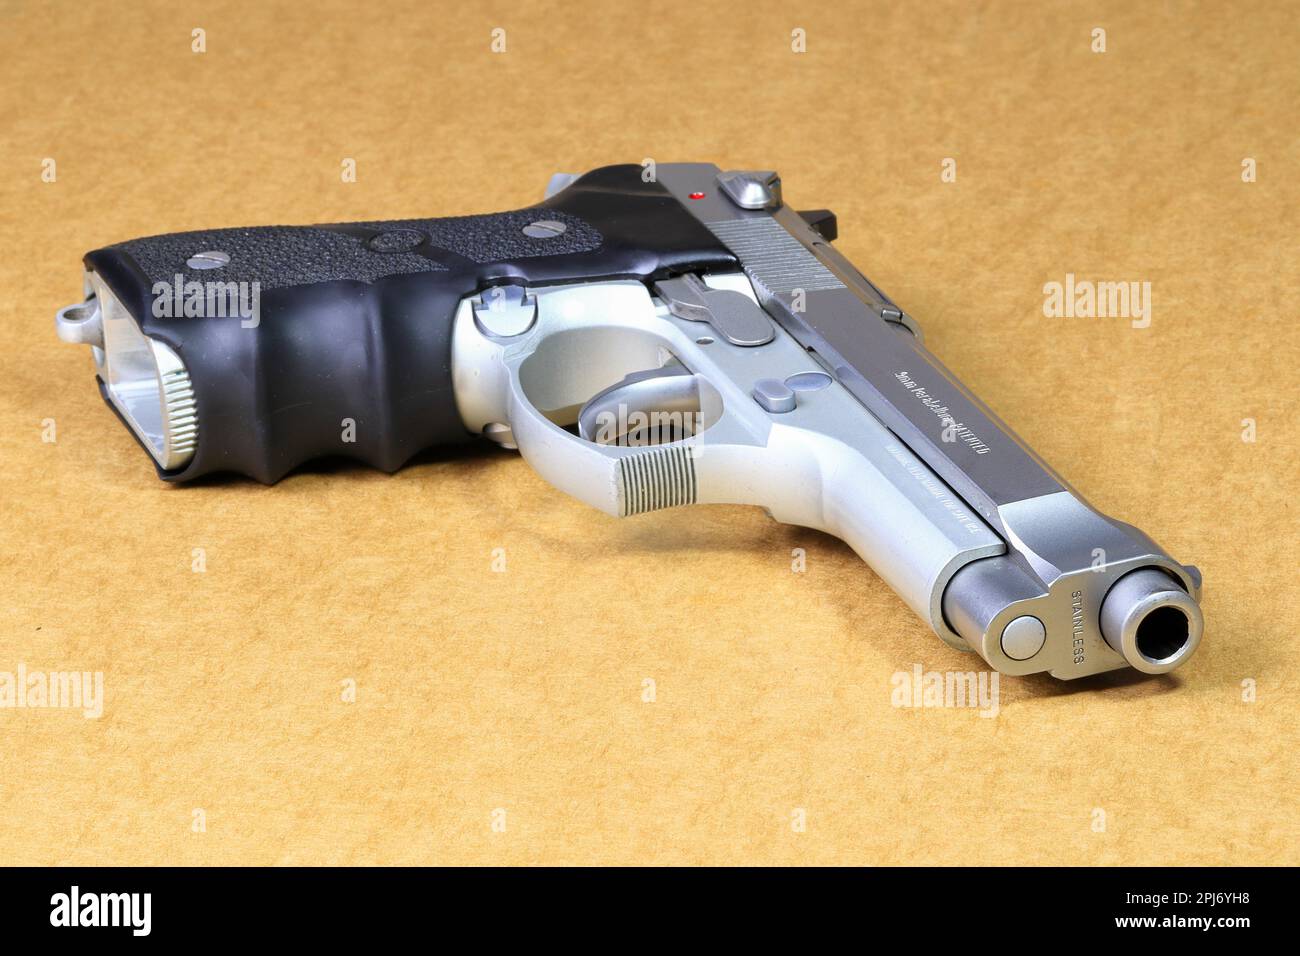 Beretta 92FS, M9 gun on brown paper background. Stock Photo